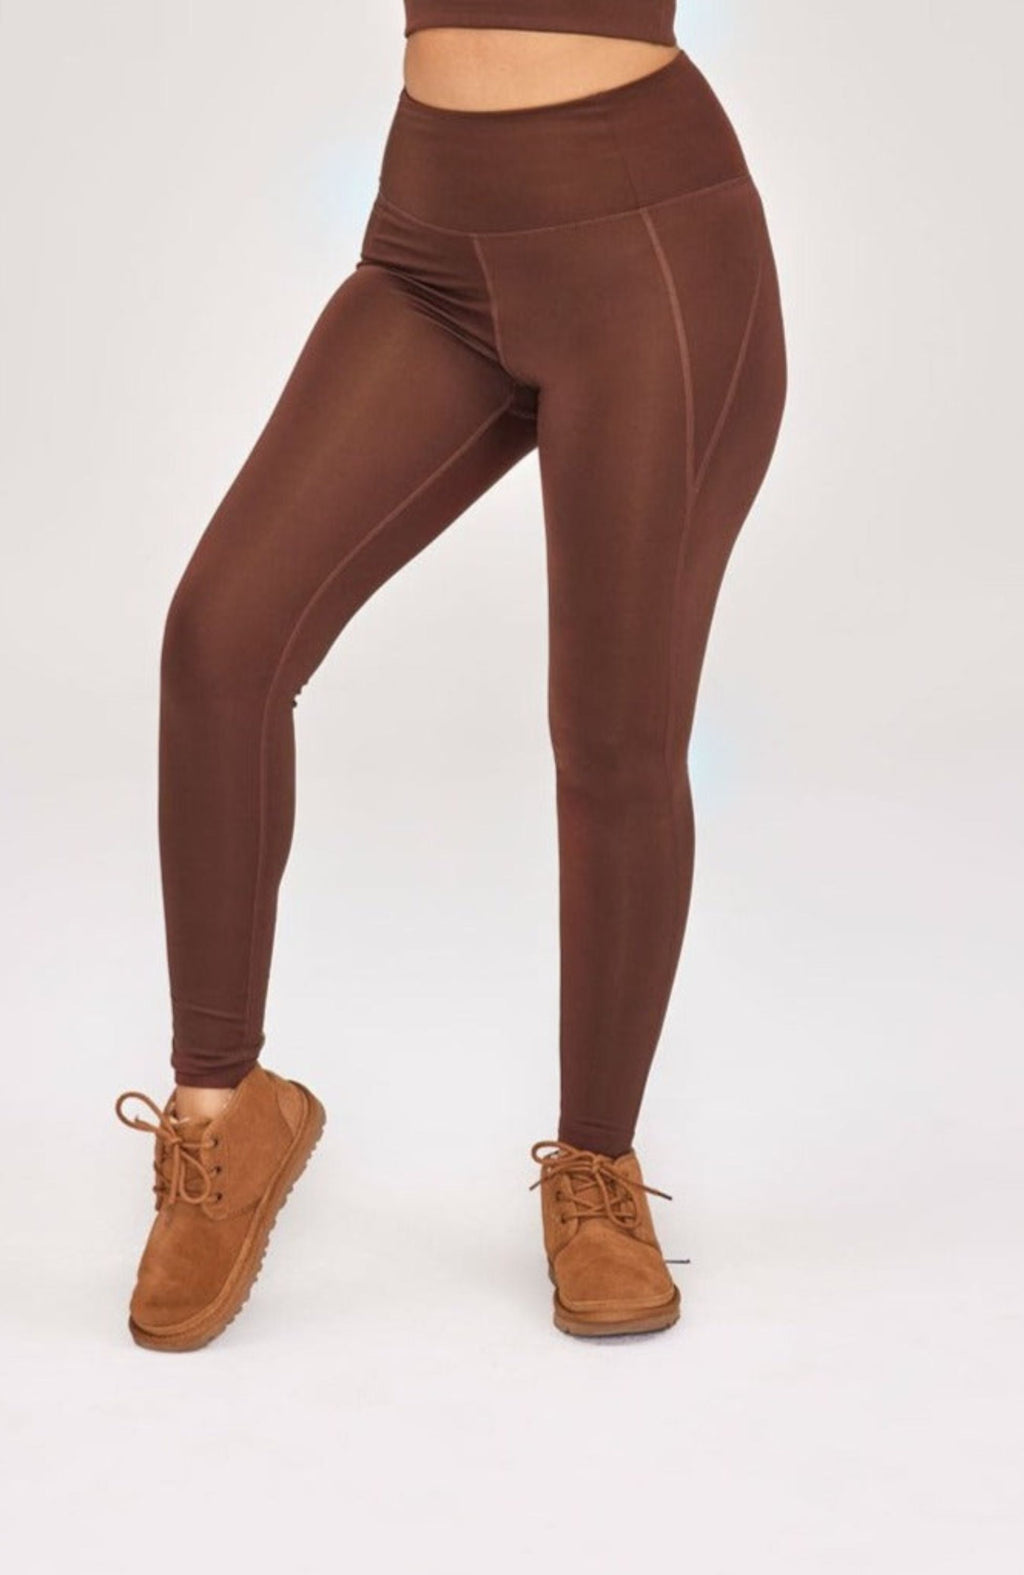 Sophia Fleece Lined Leggings - Chocolate – Queen Of Fashion